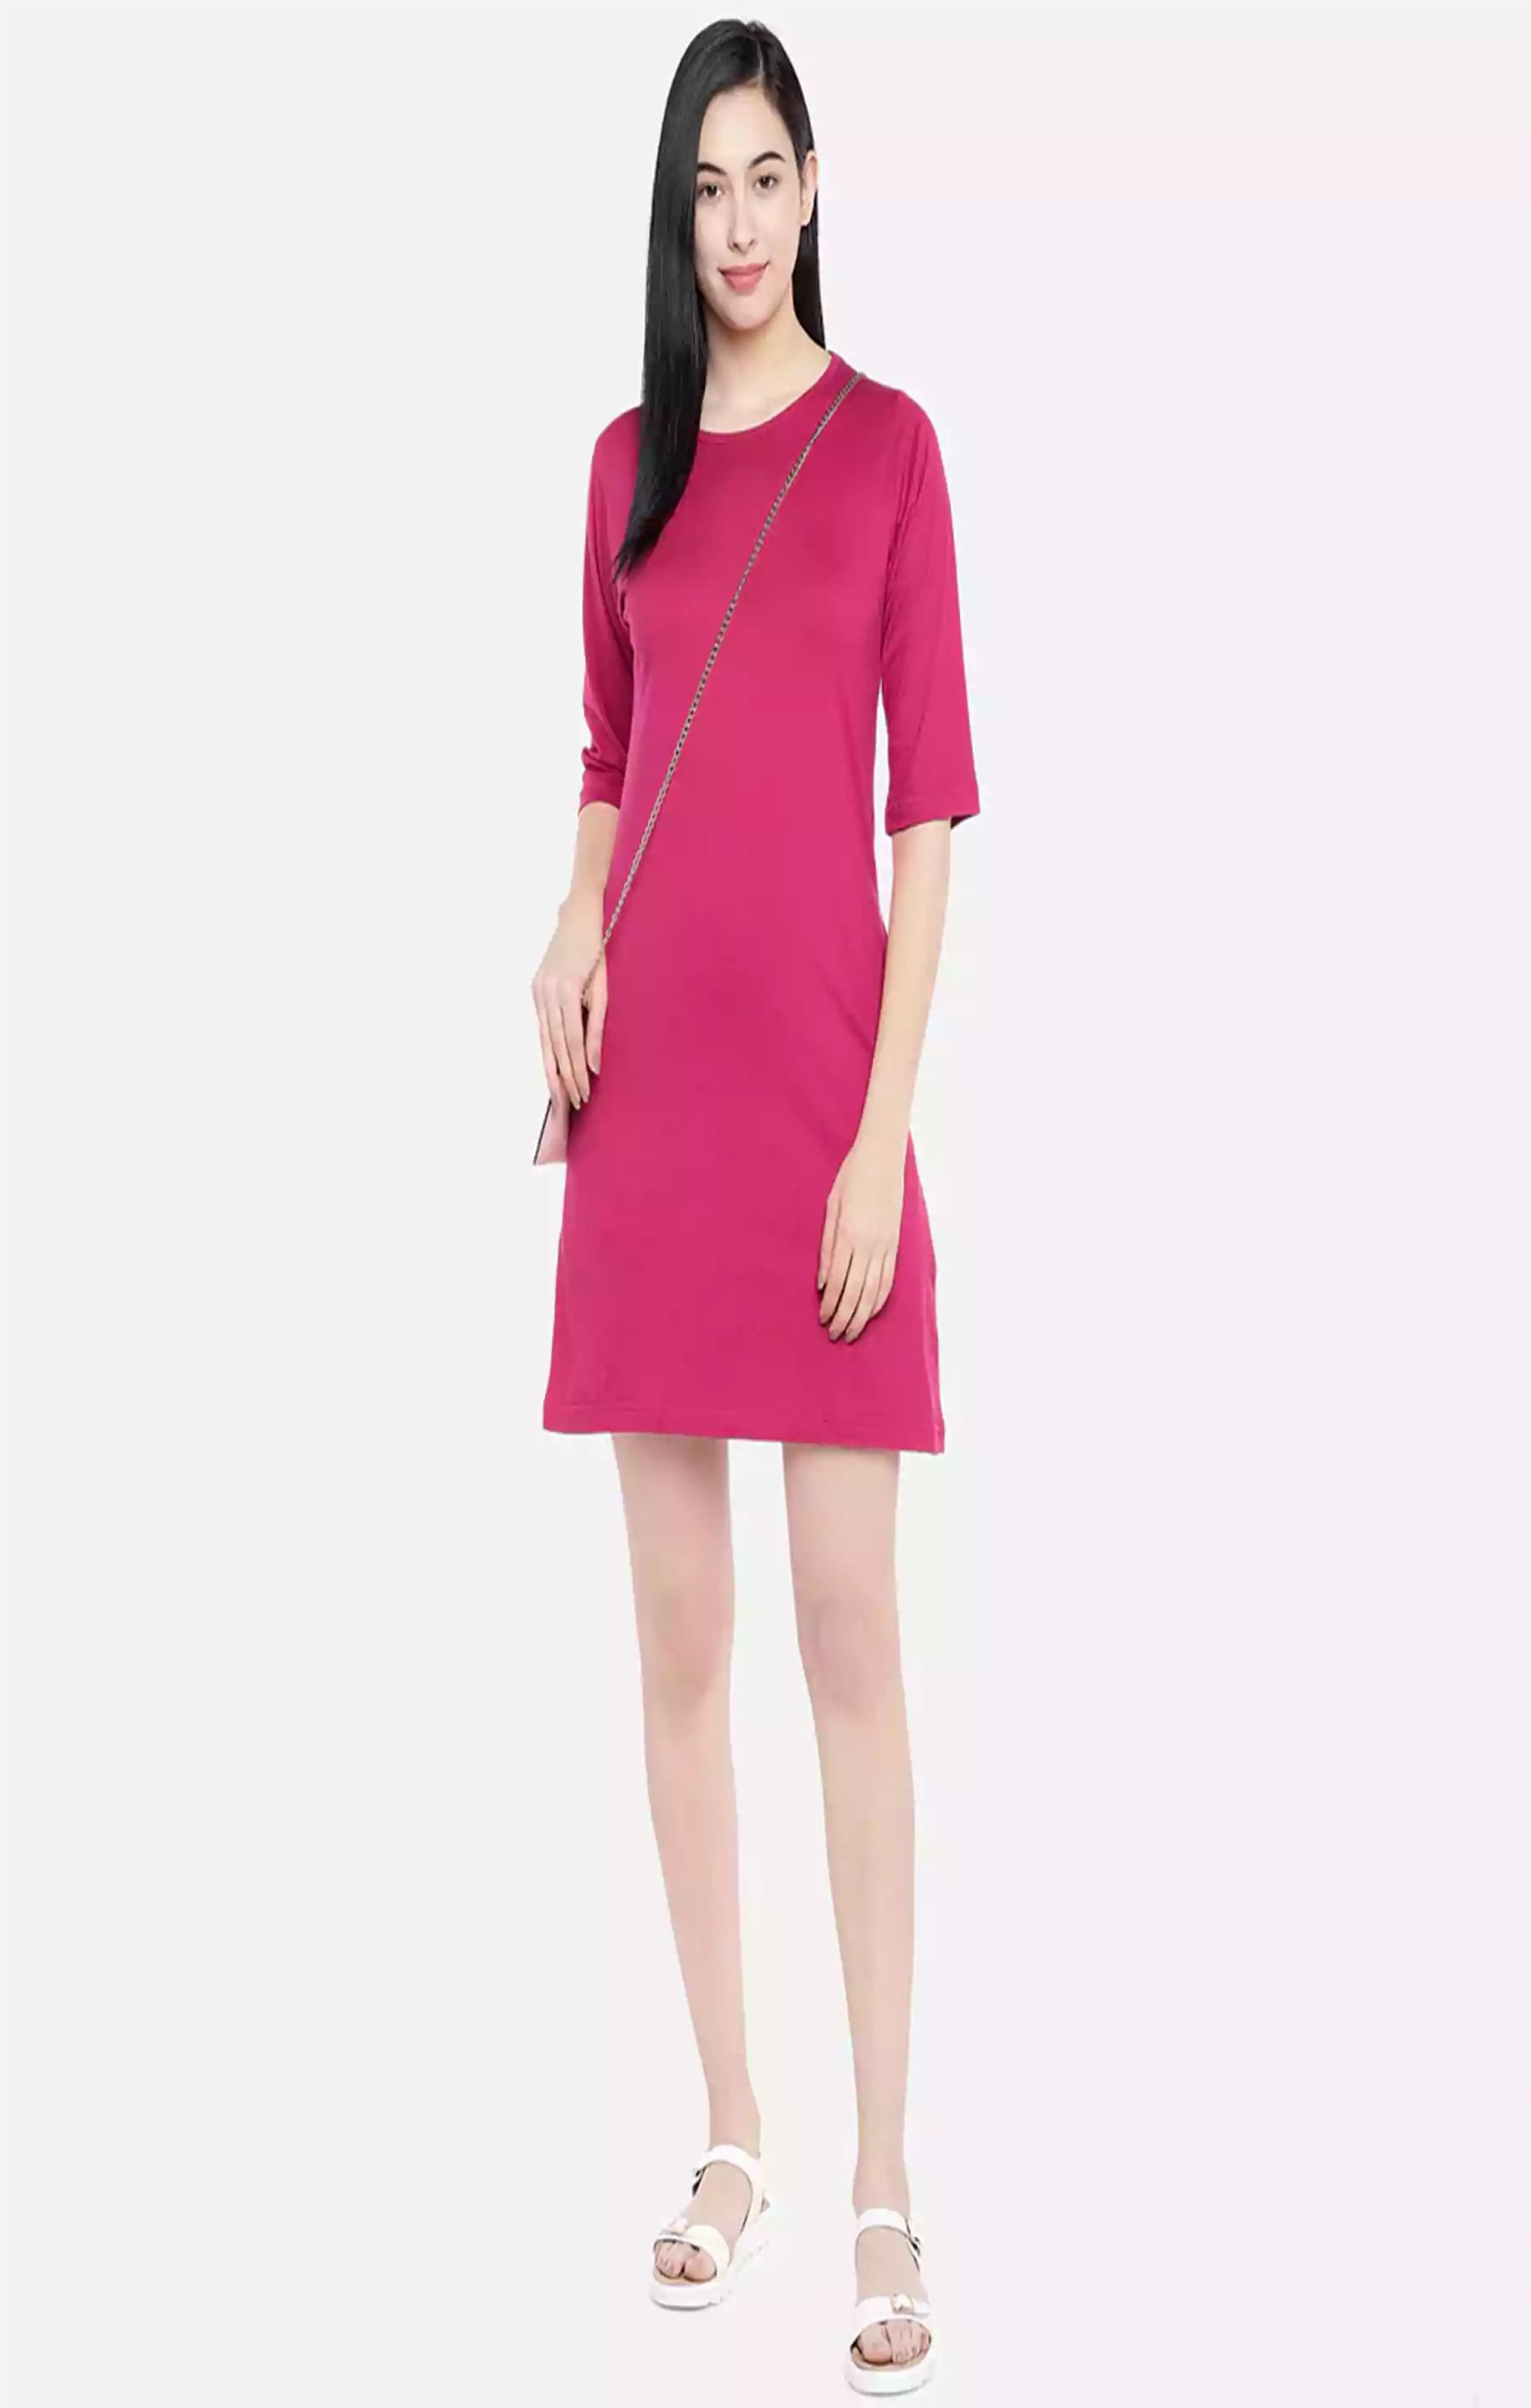 Dark Pink - Sukhiaatma Designer T-shirt Dress